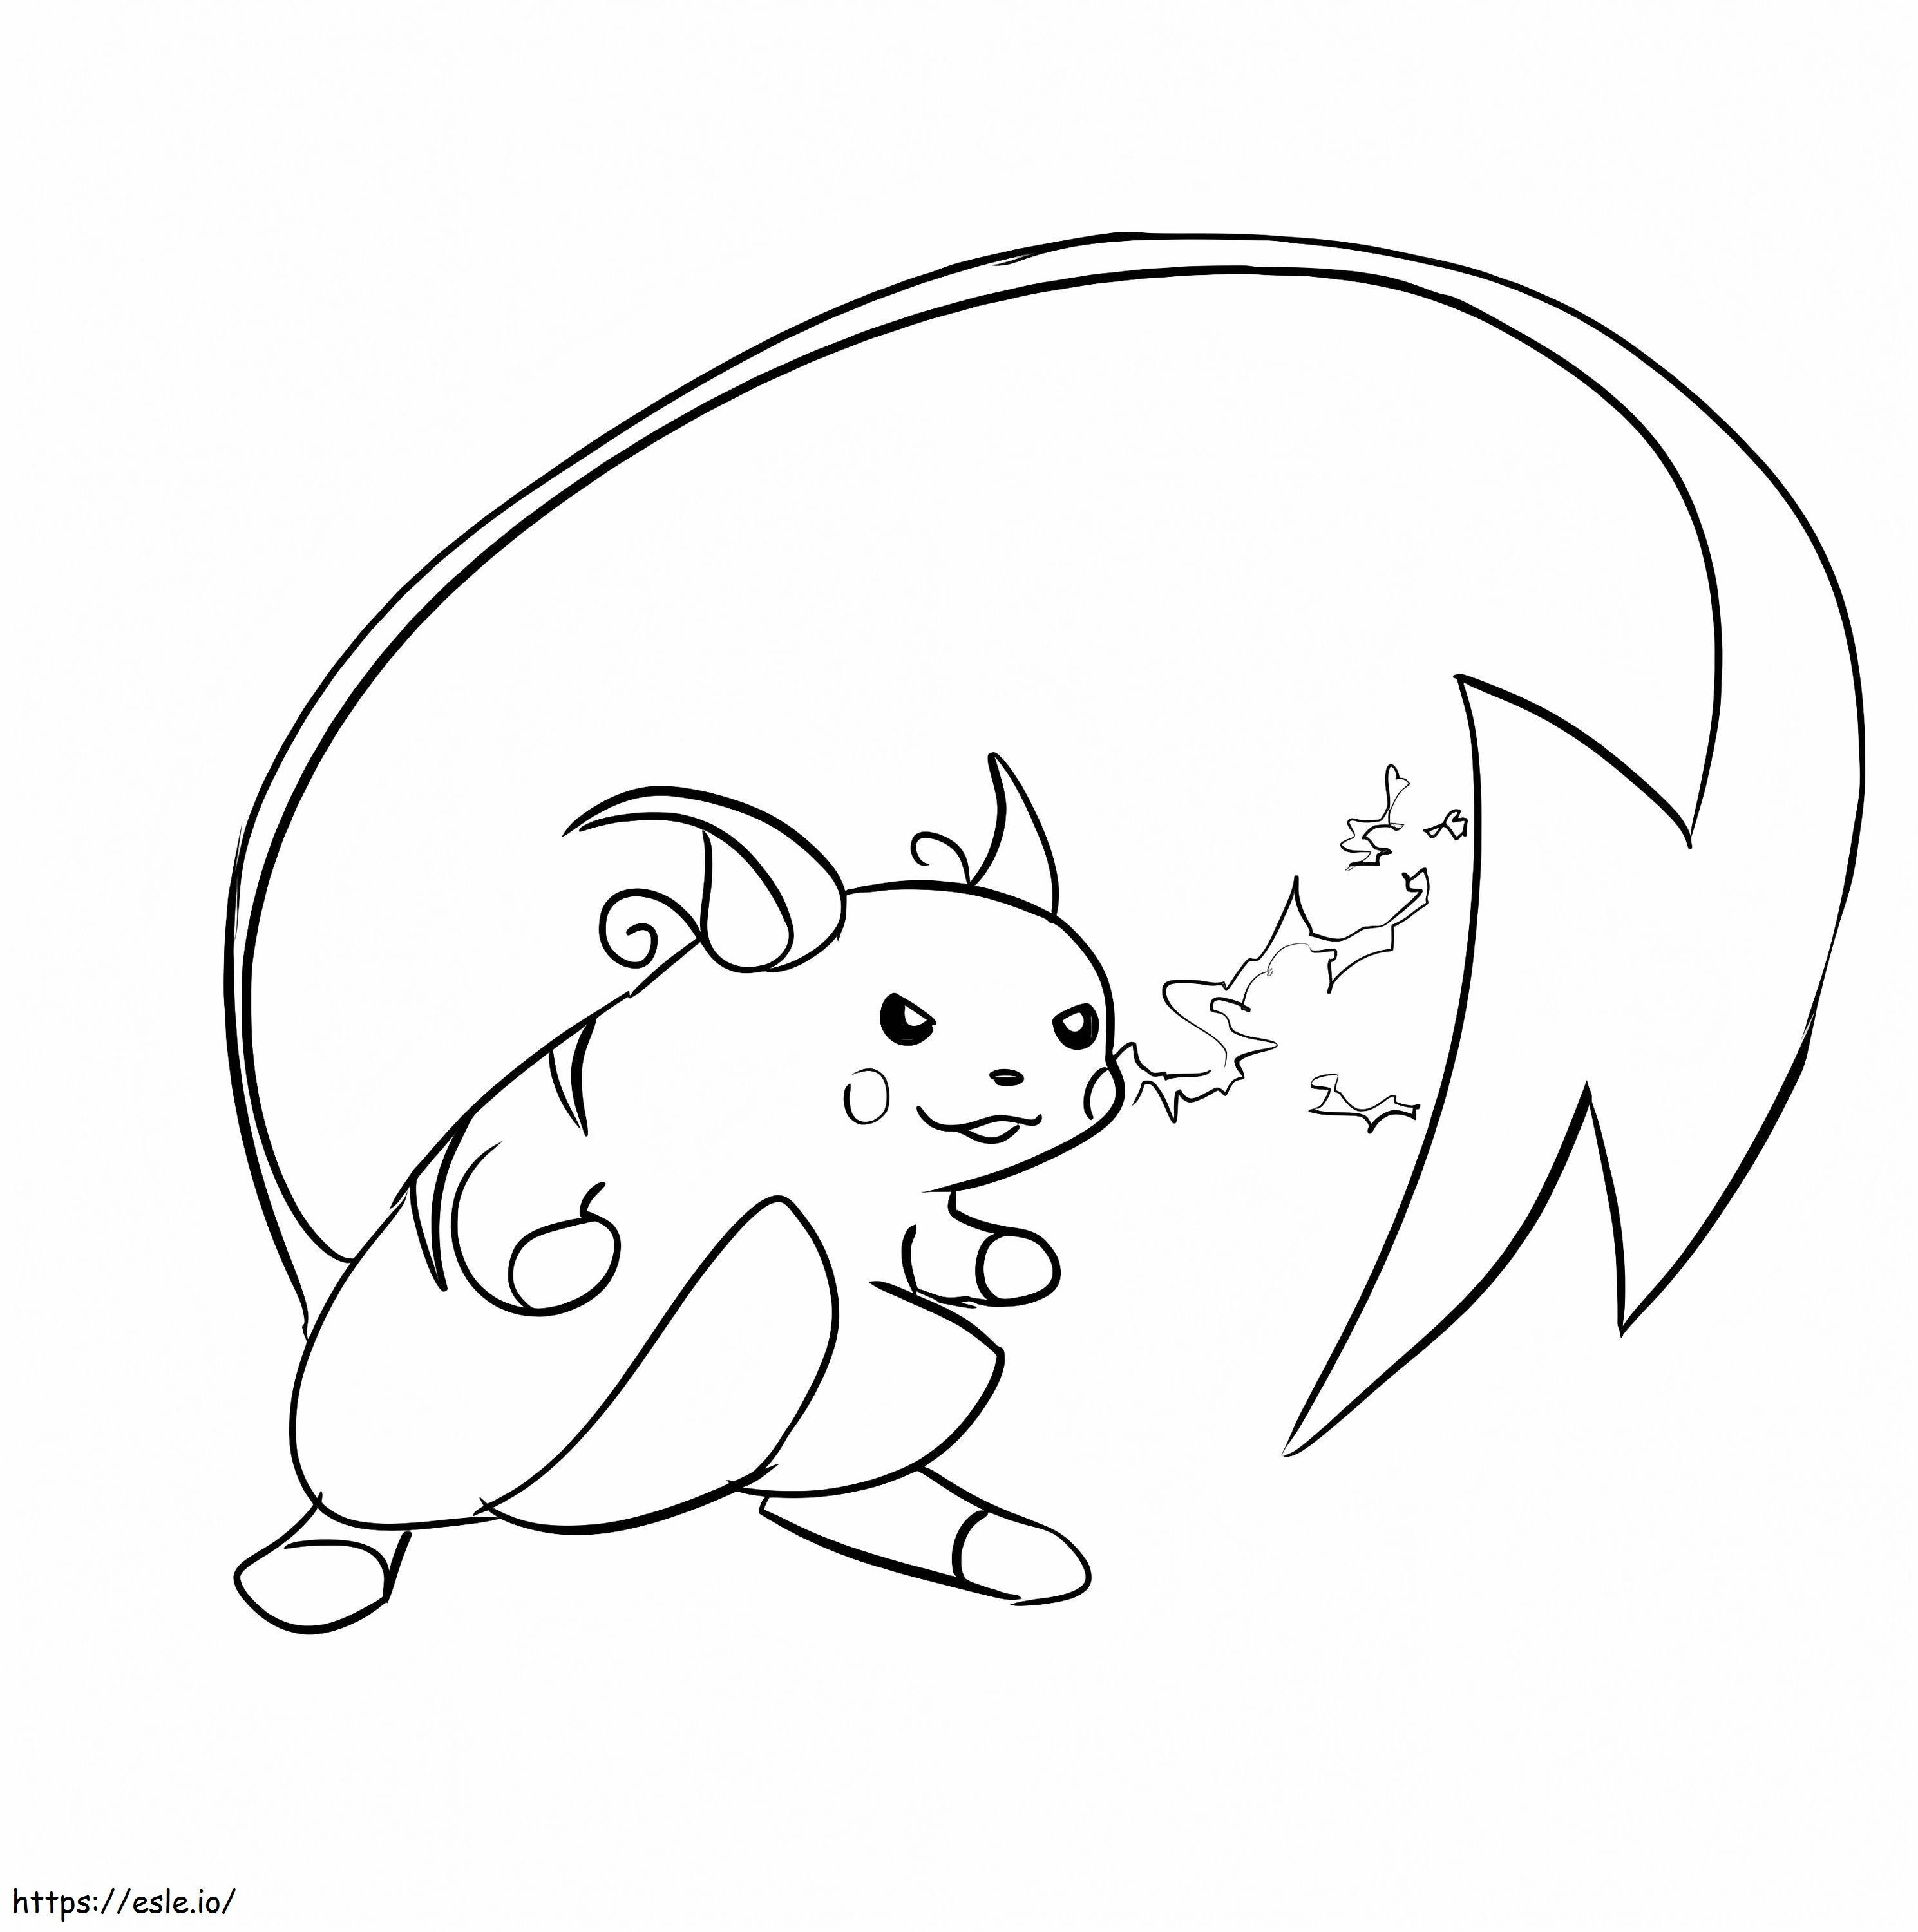 Raichu-Pokémon ausmalbilder